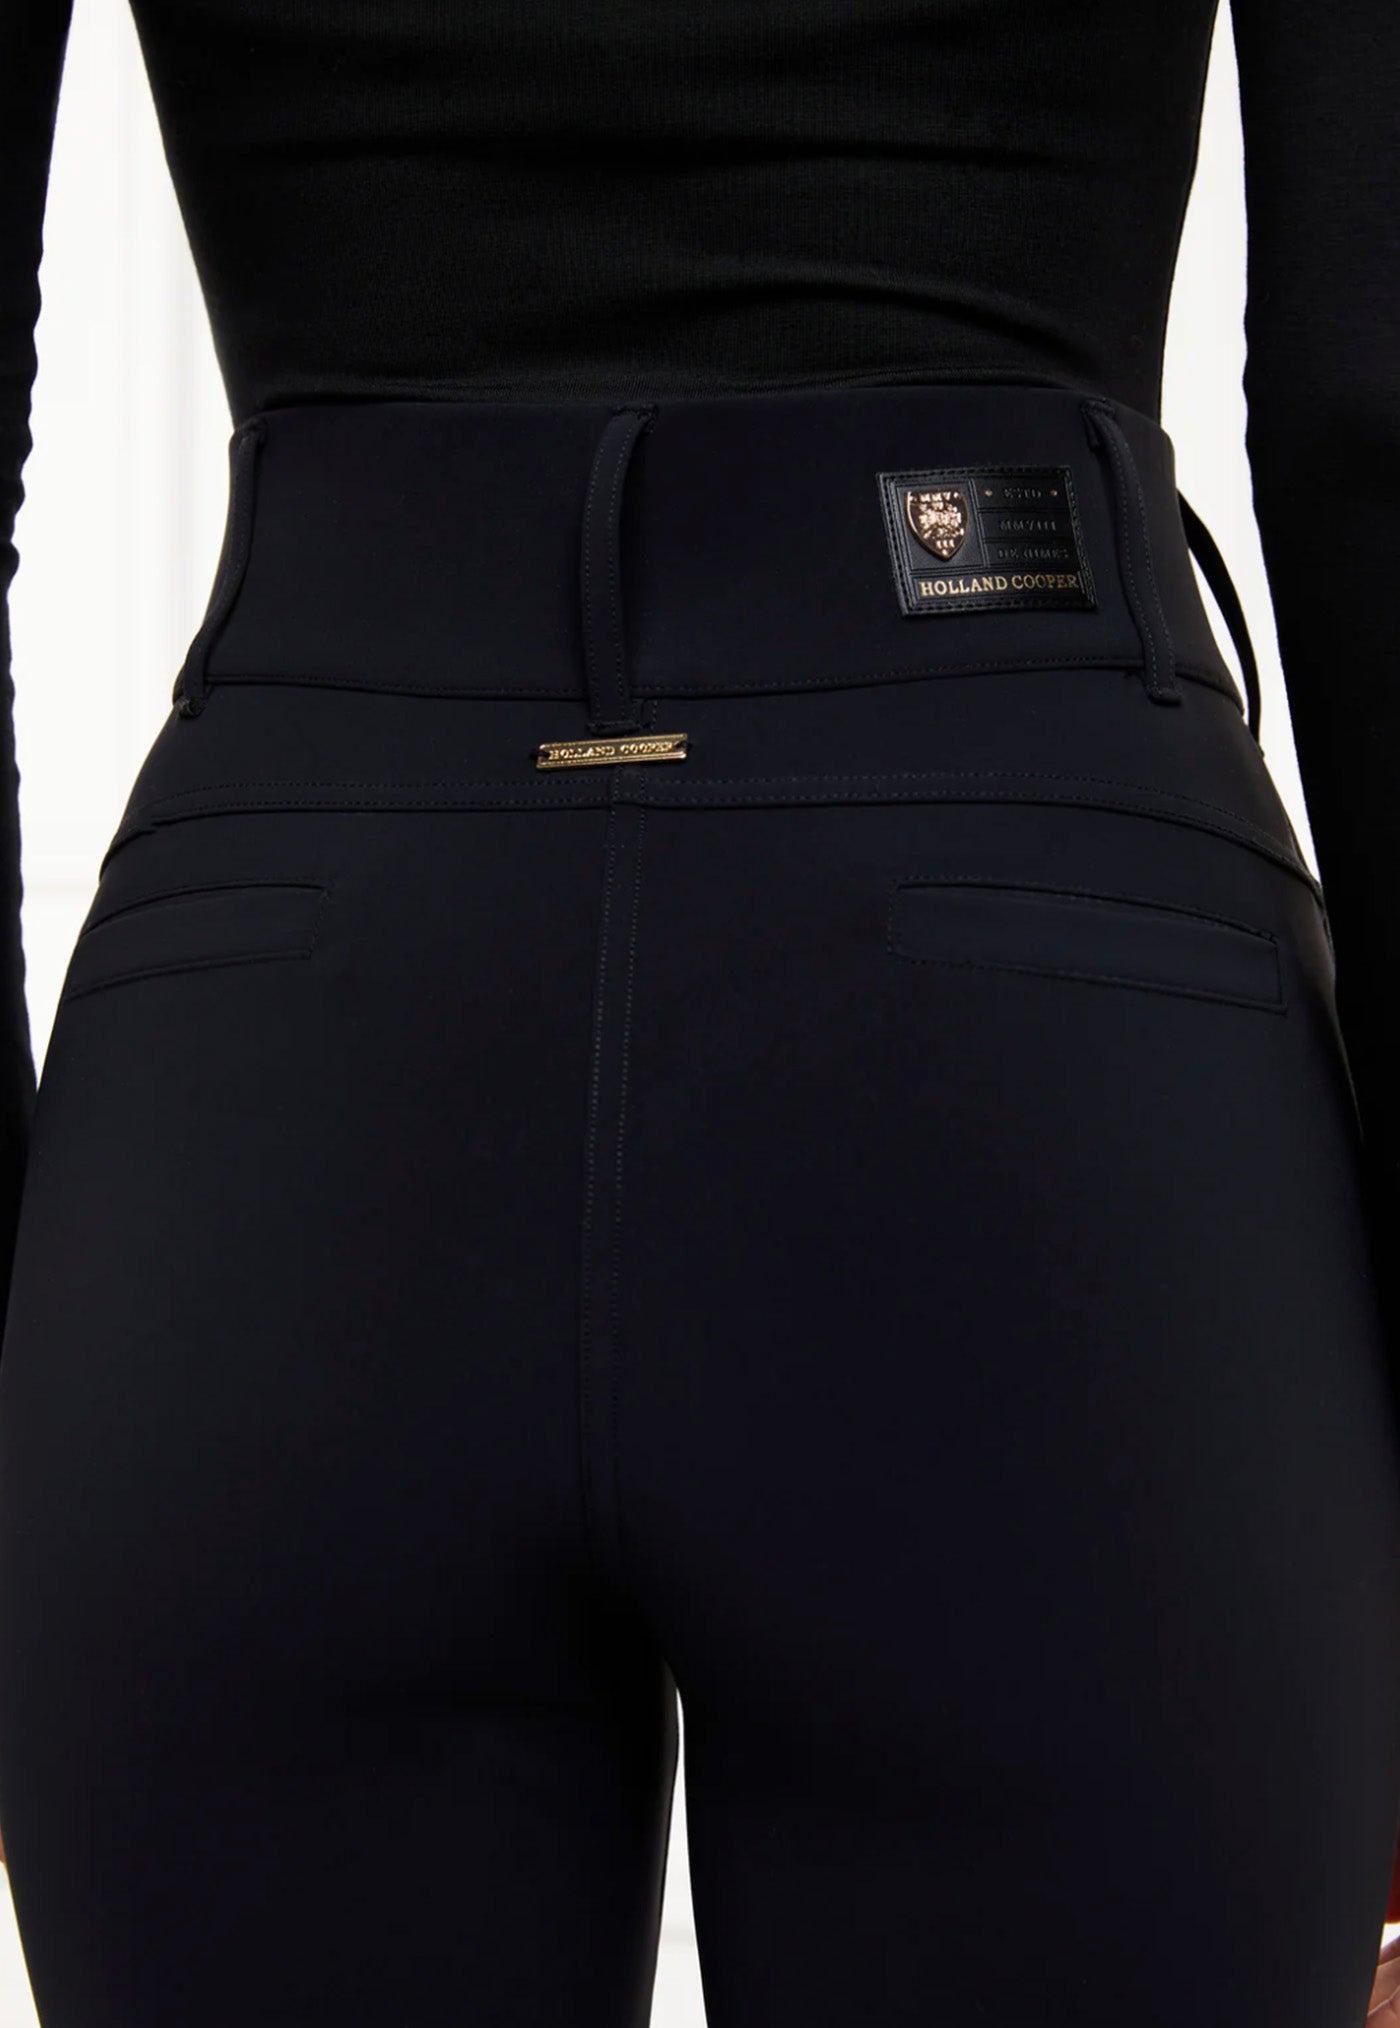 Contour Trouser - Black sold by Angel Divine